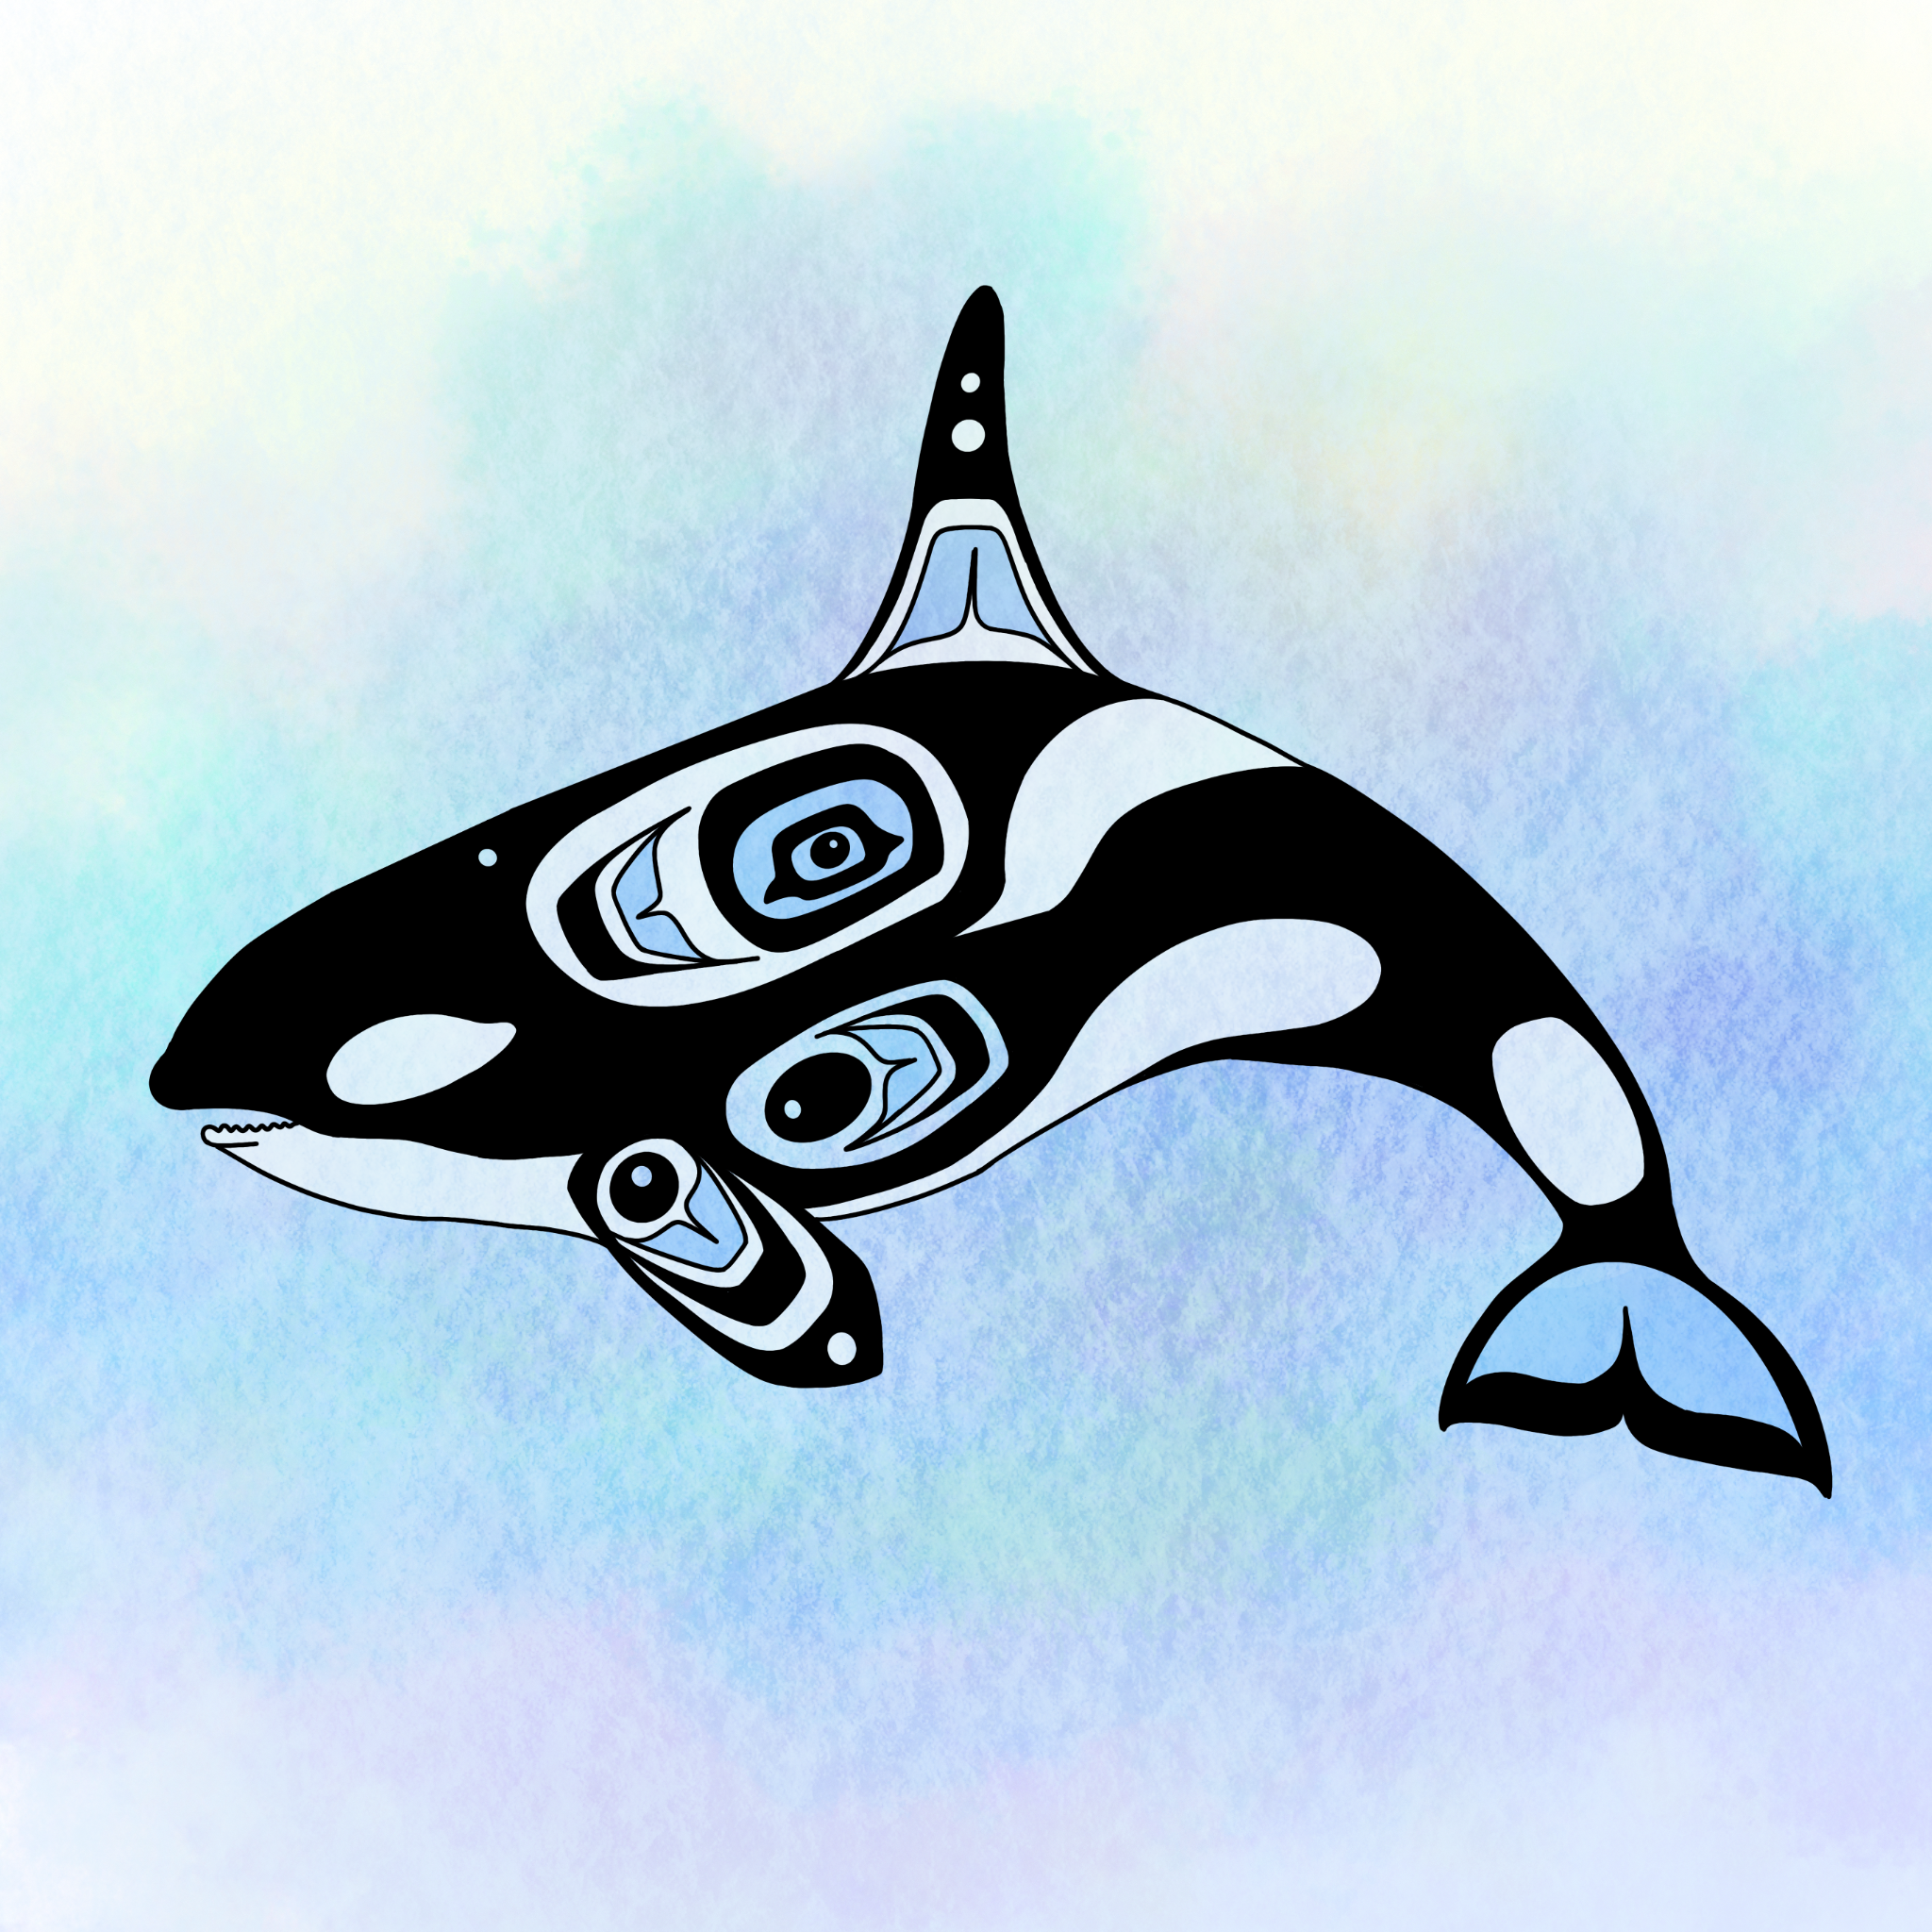 Cori-Johnson-Killer-Whale-Digital-Art